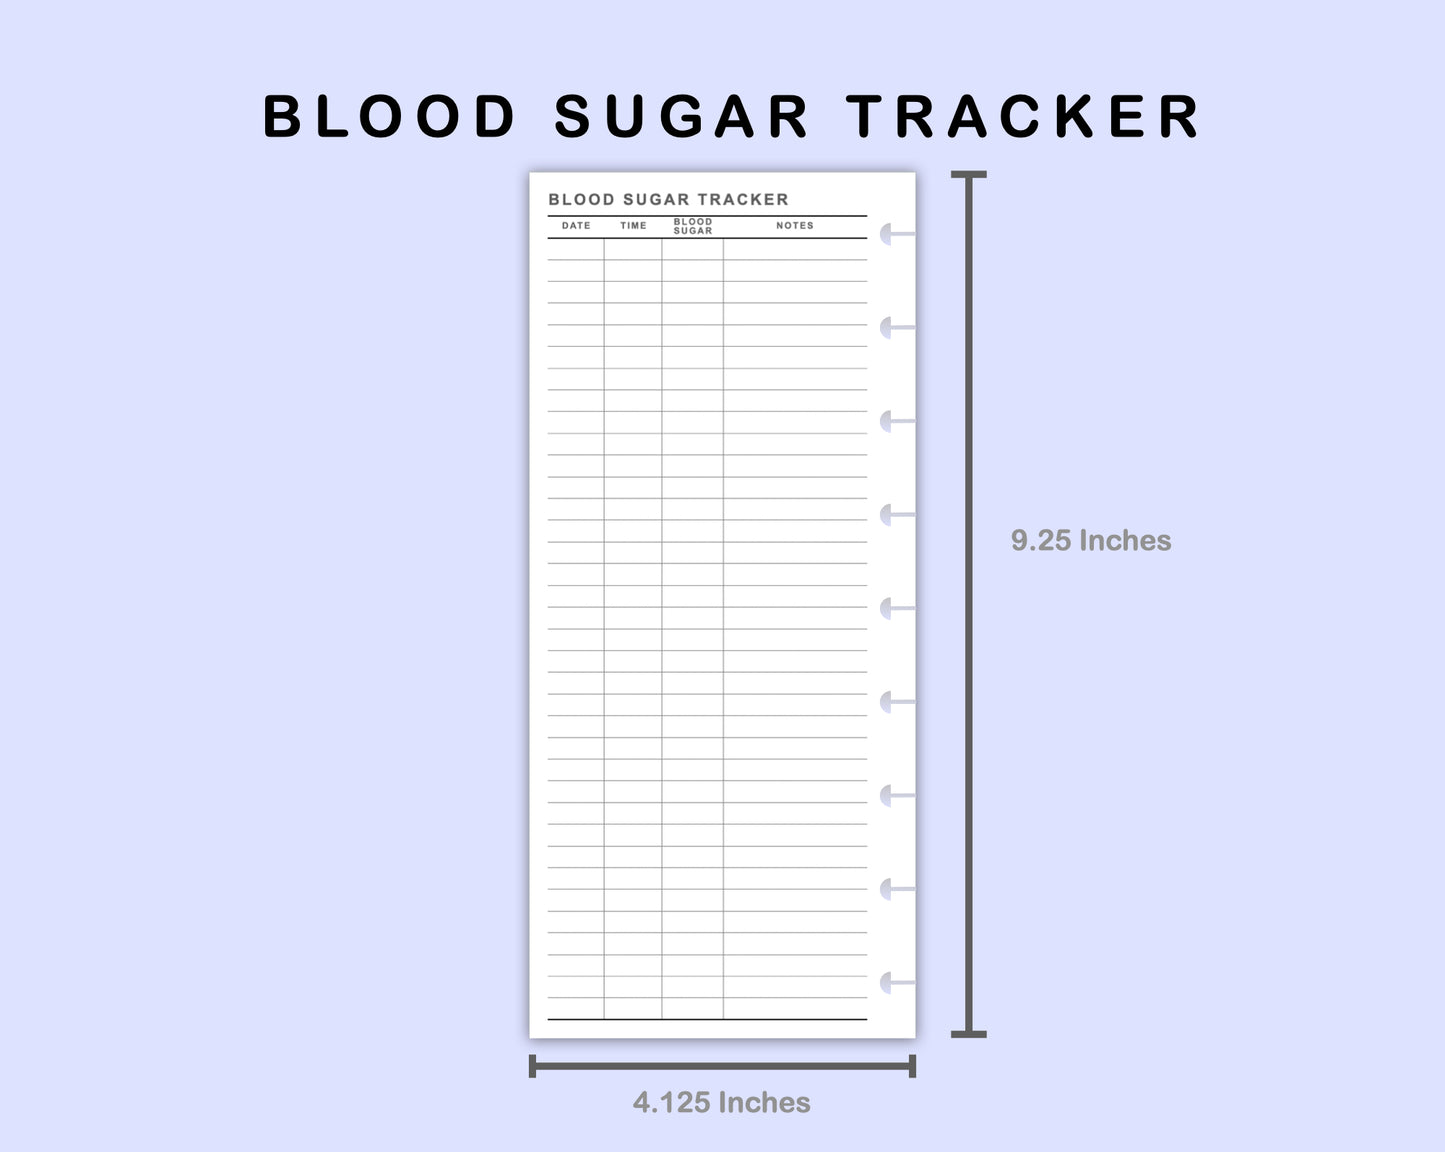 Skinny Classic HP Inserts - Blood Sugar Tracker